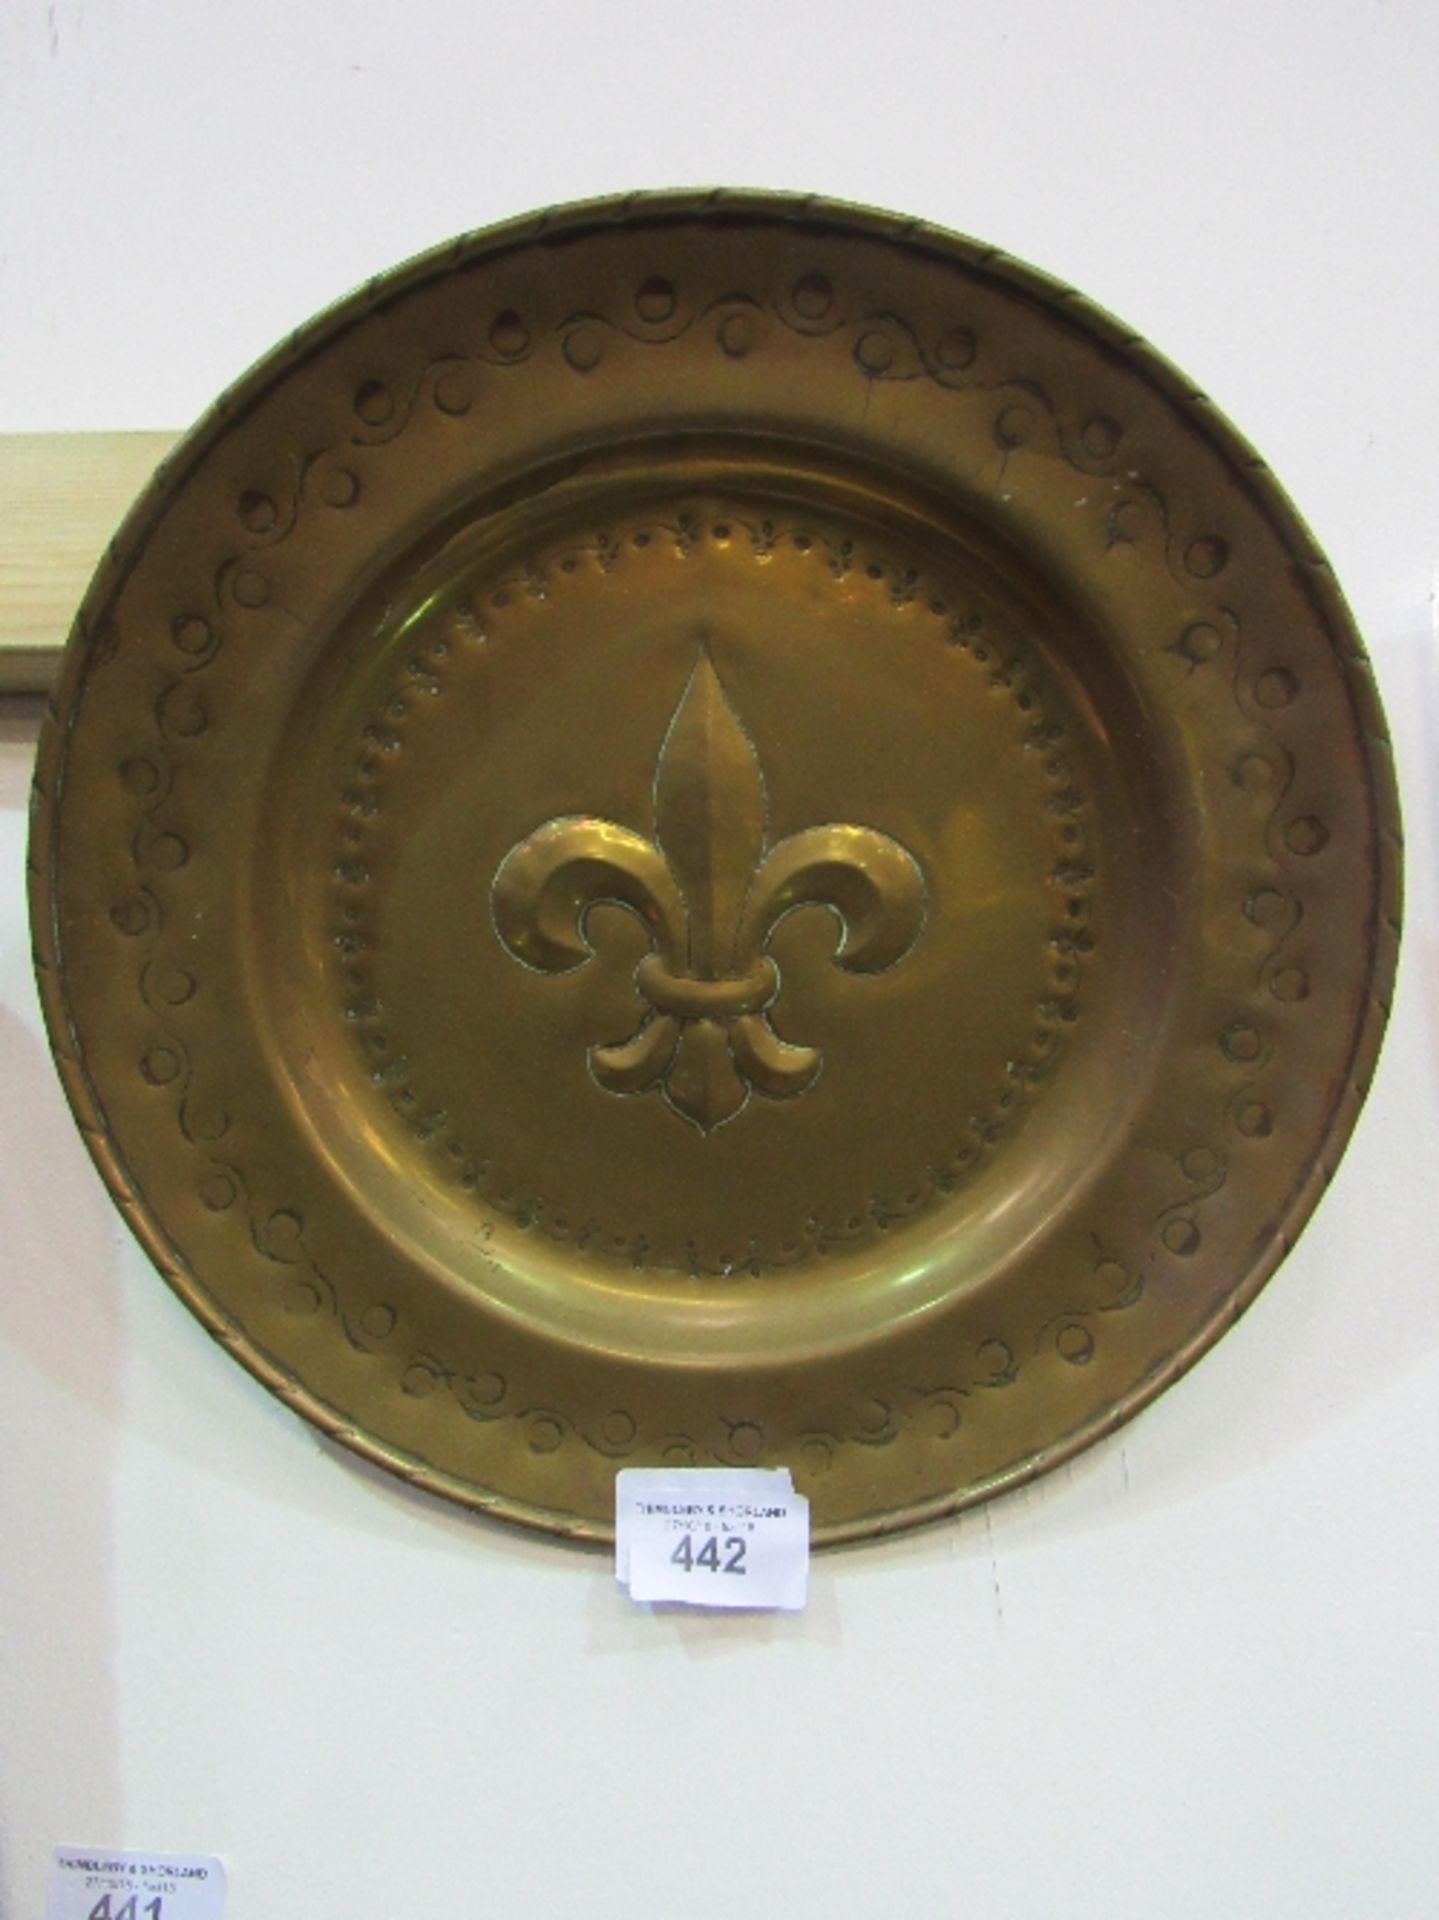 Brass charger with fleurs de lys decoration, 46cms diameter. Price guide £20-25.